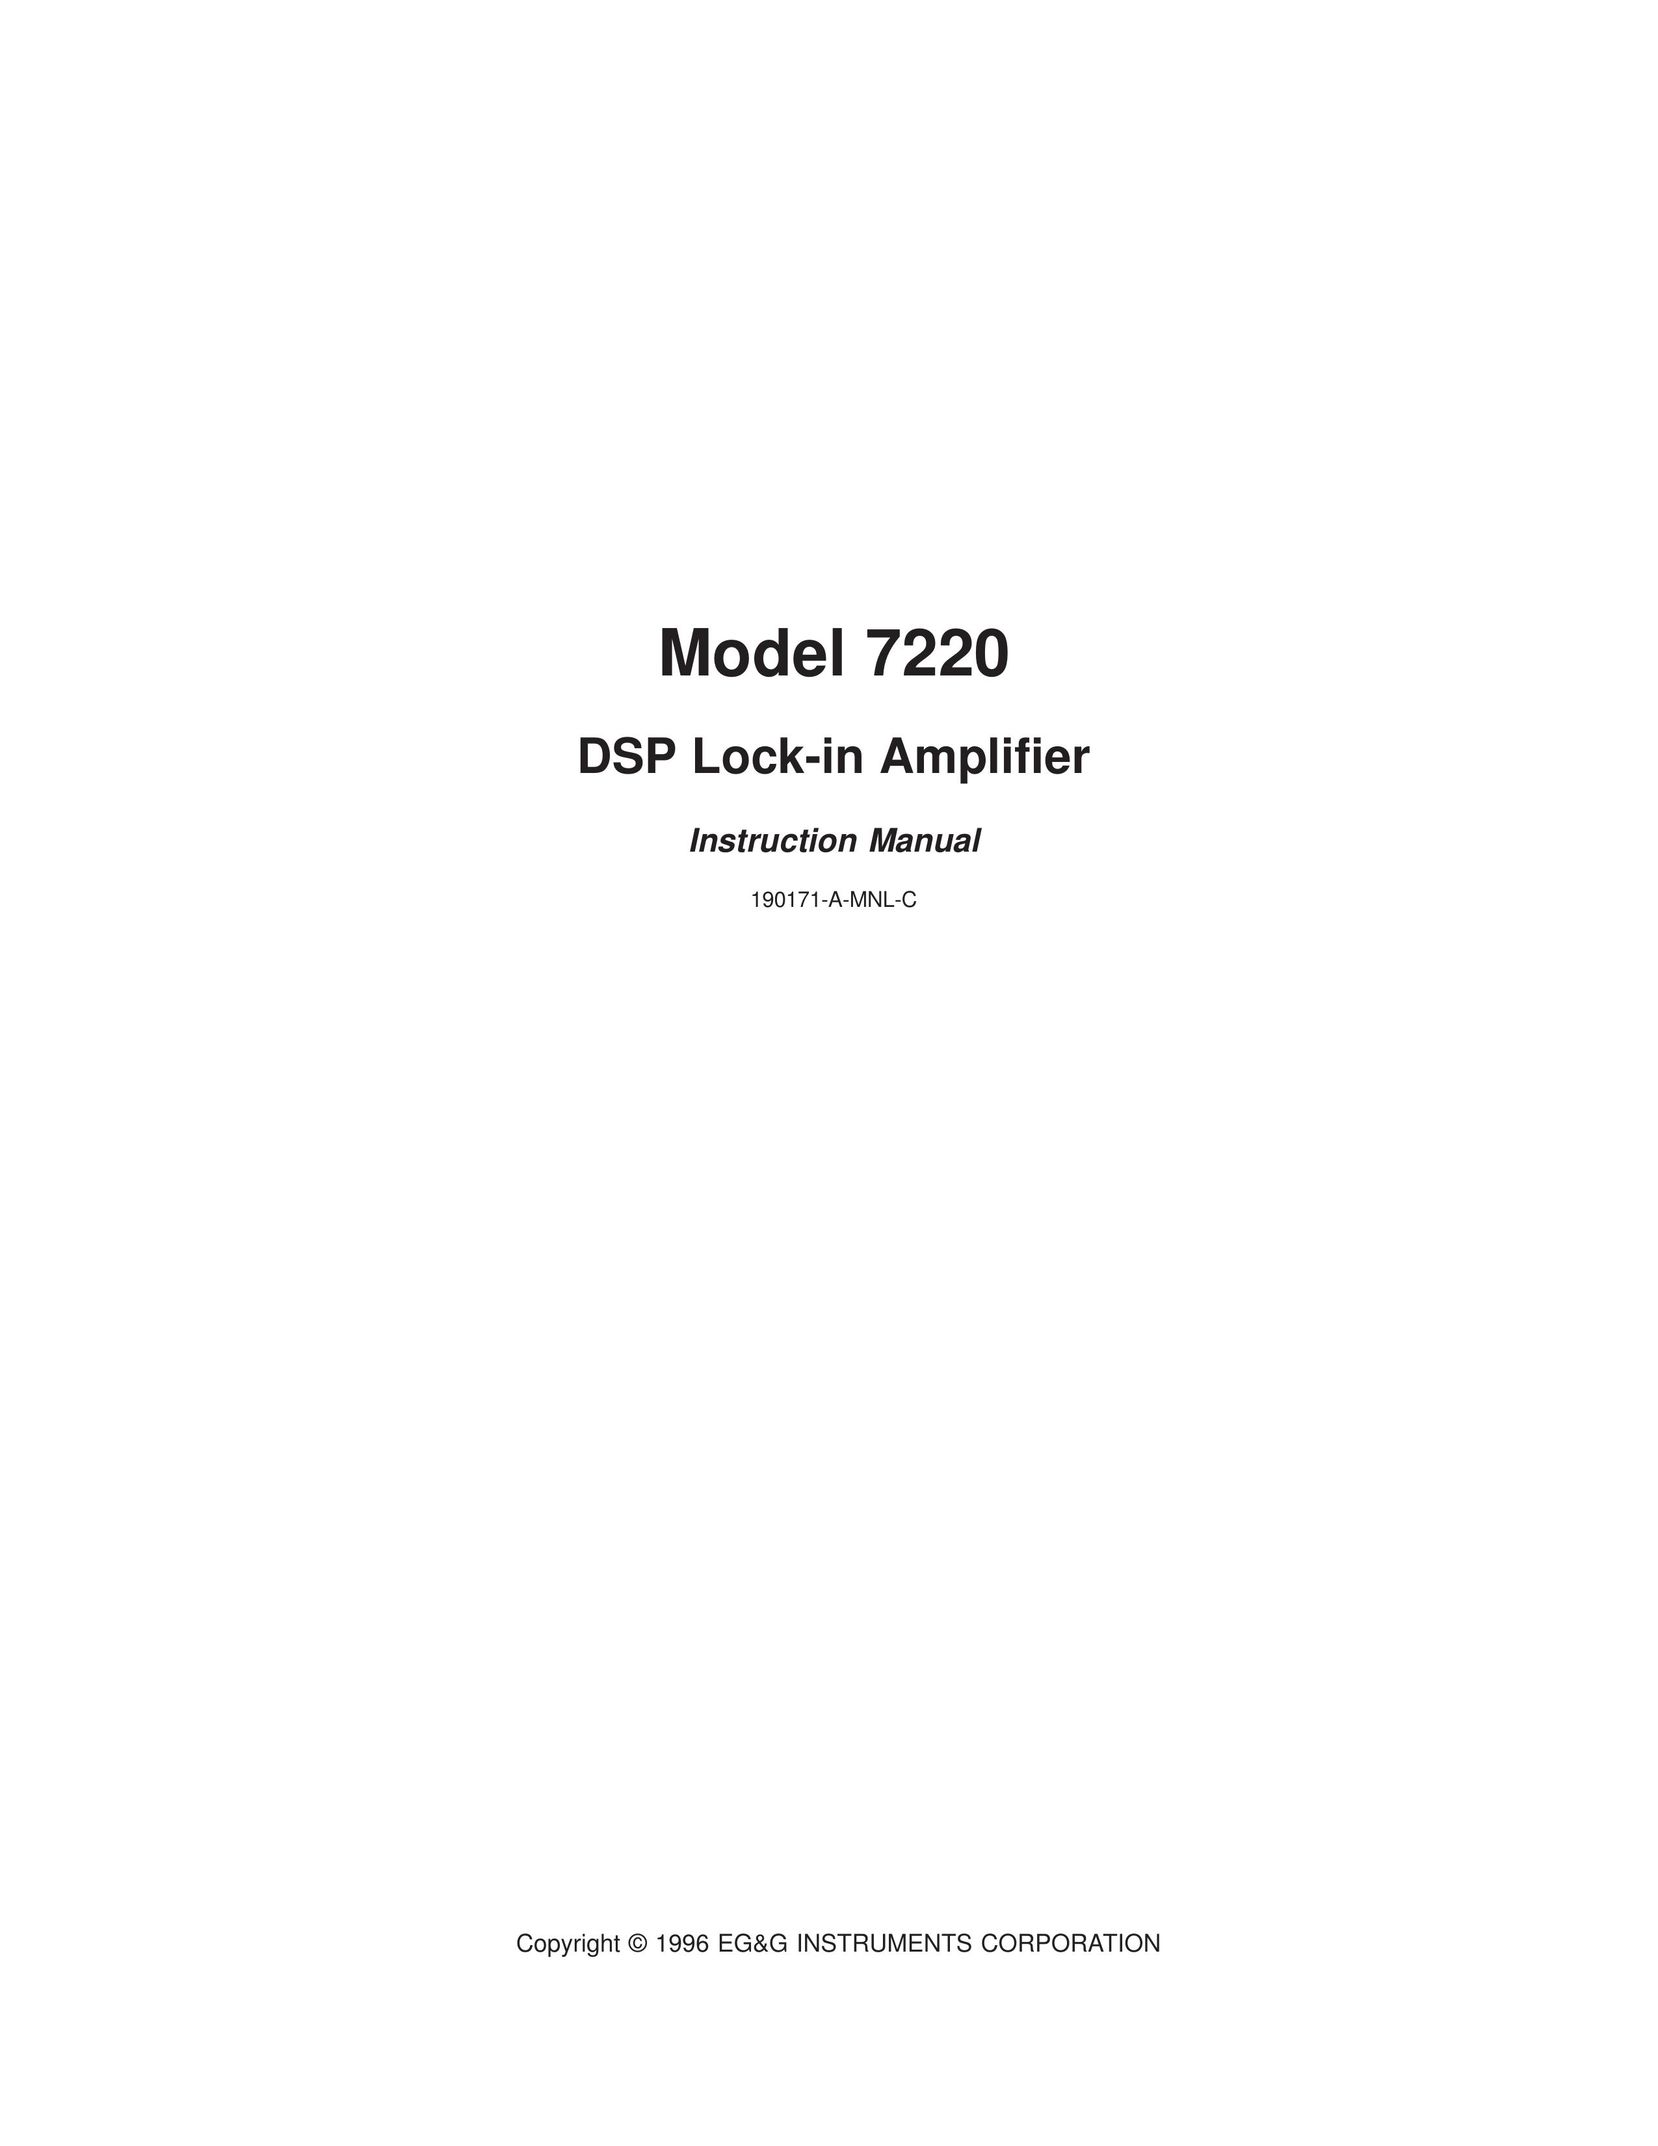 IBM 7220 Car Amplifier User Manual